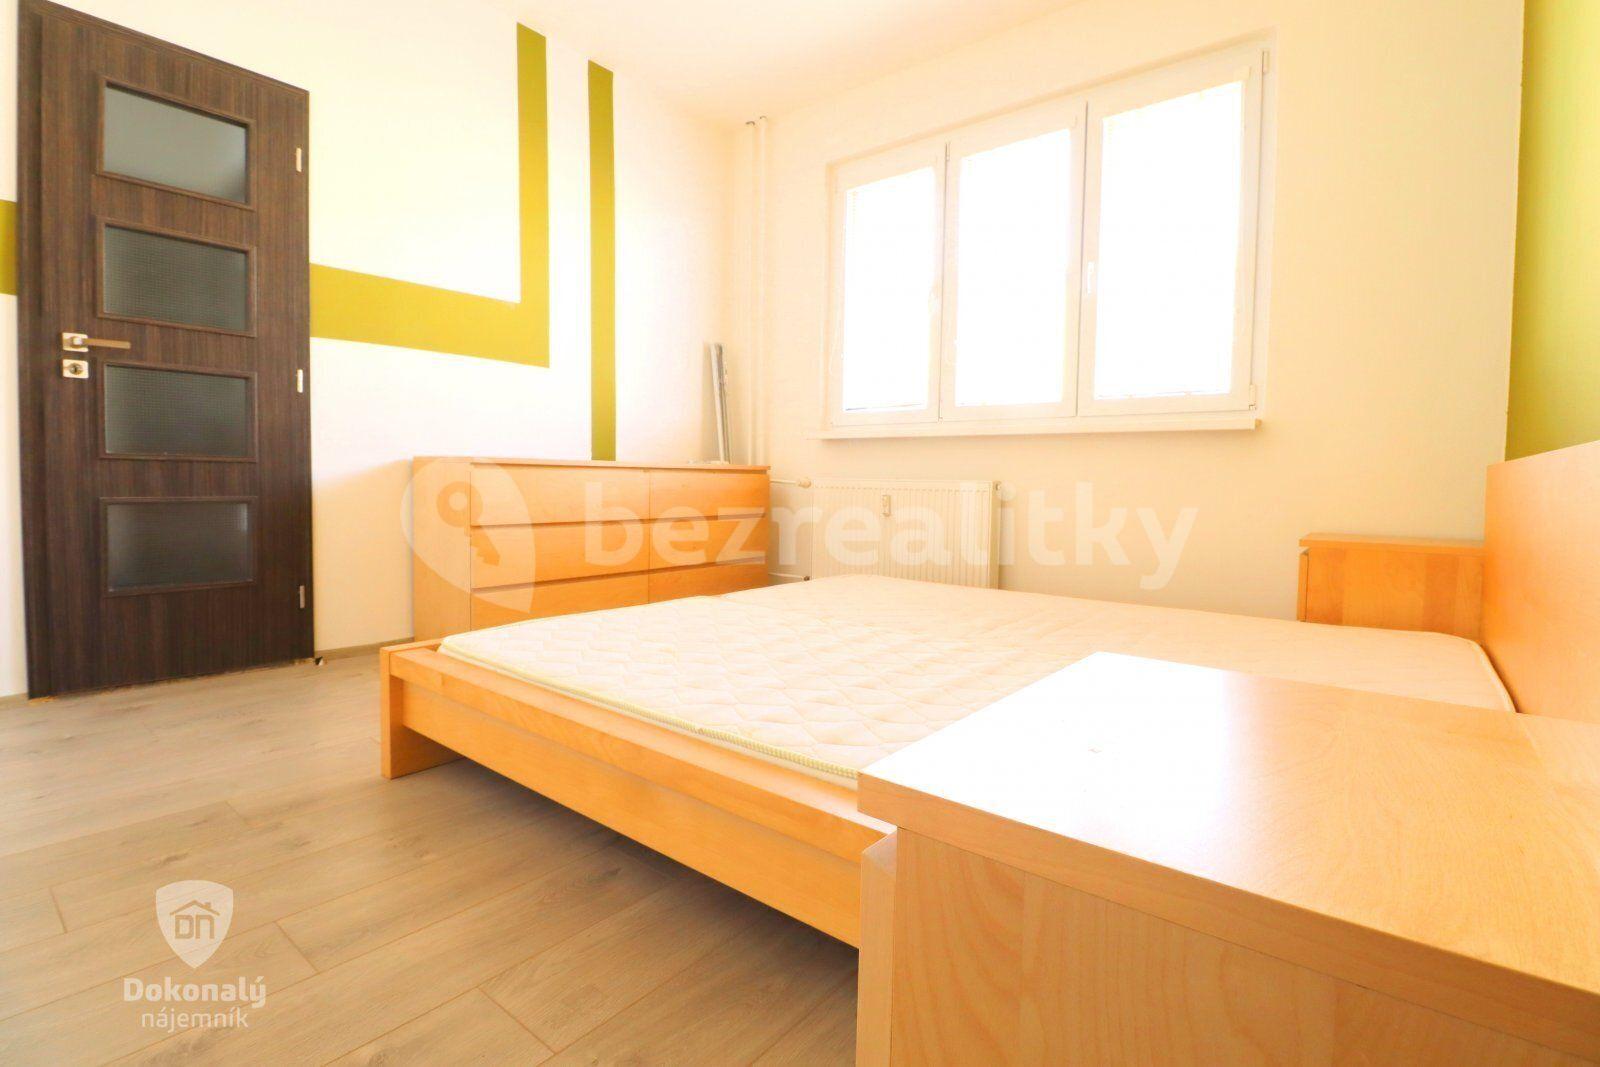 2 bedroom with open-plan kitchen flat to rent, 75 m², Skřivanská, Prague, Prague